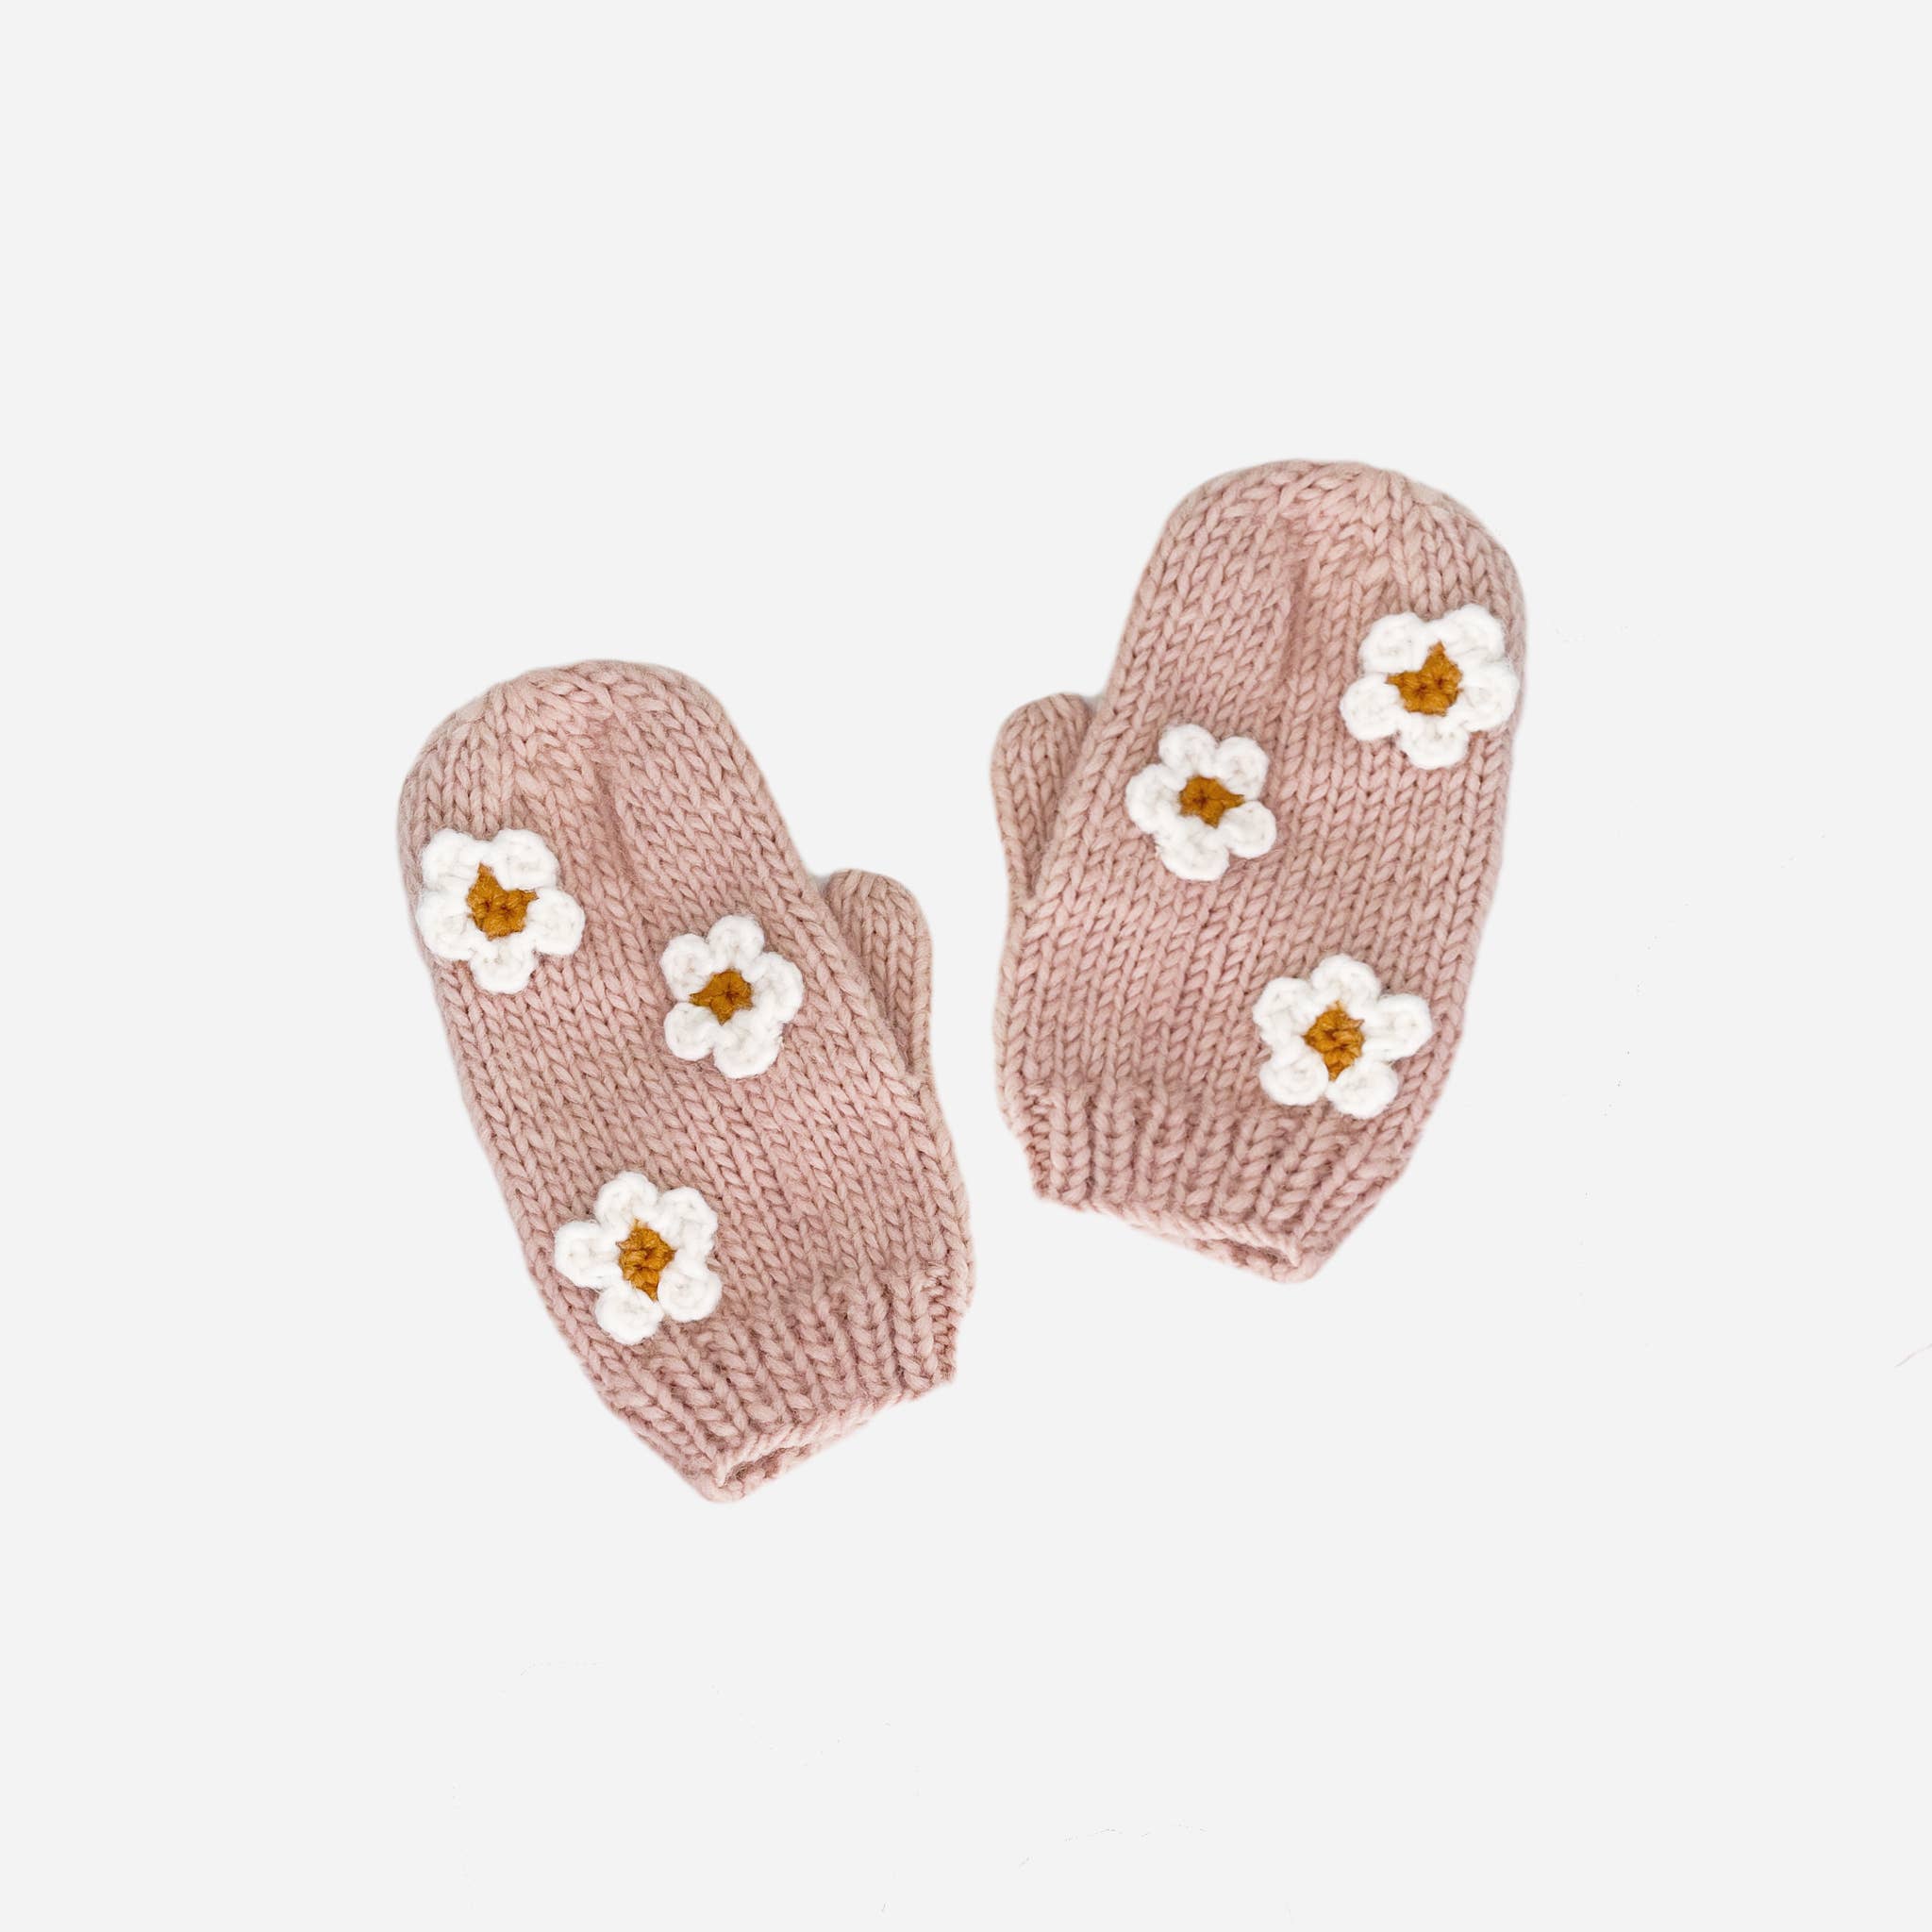 Blush Knitted Flower Mittens